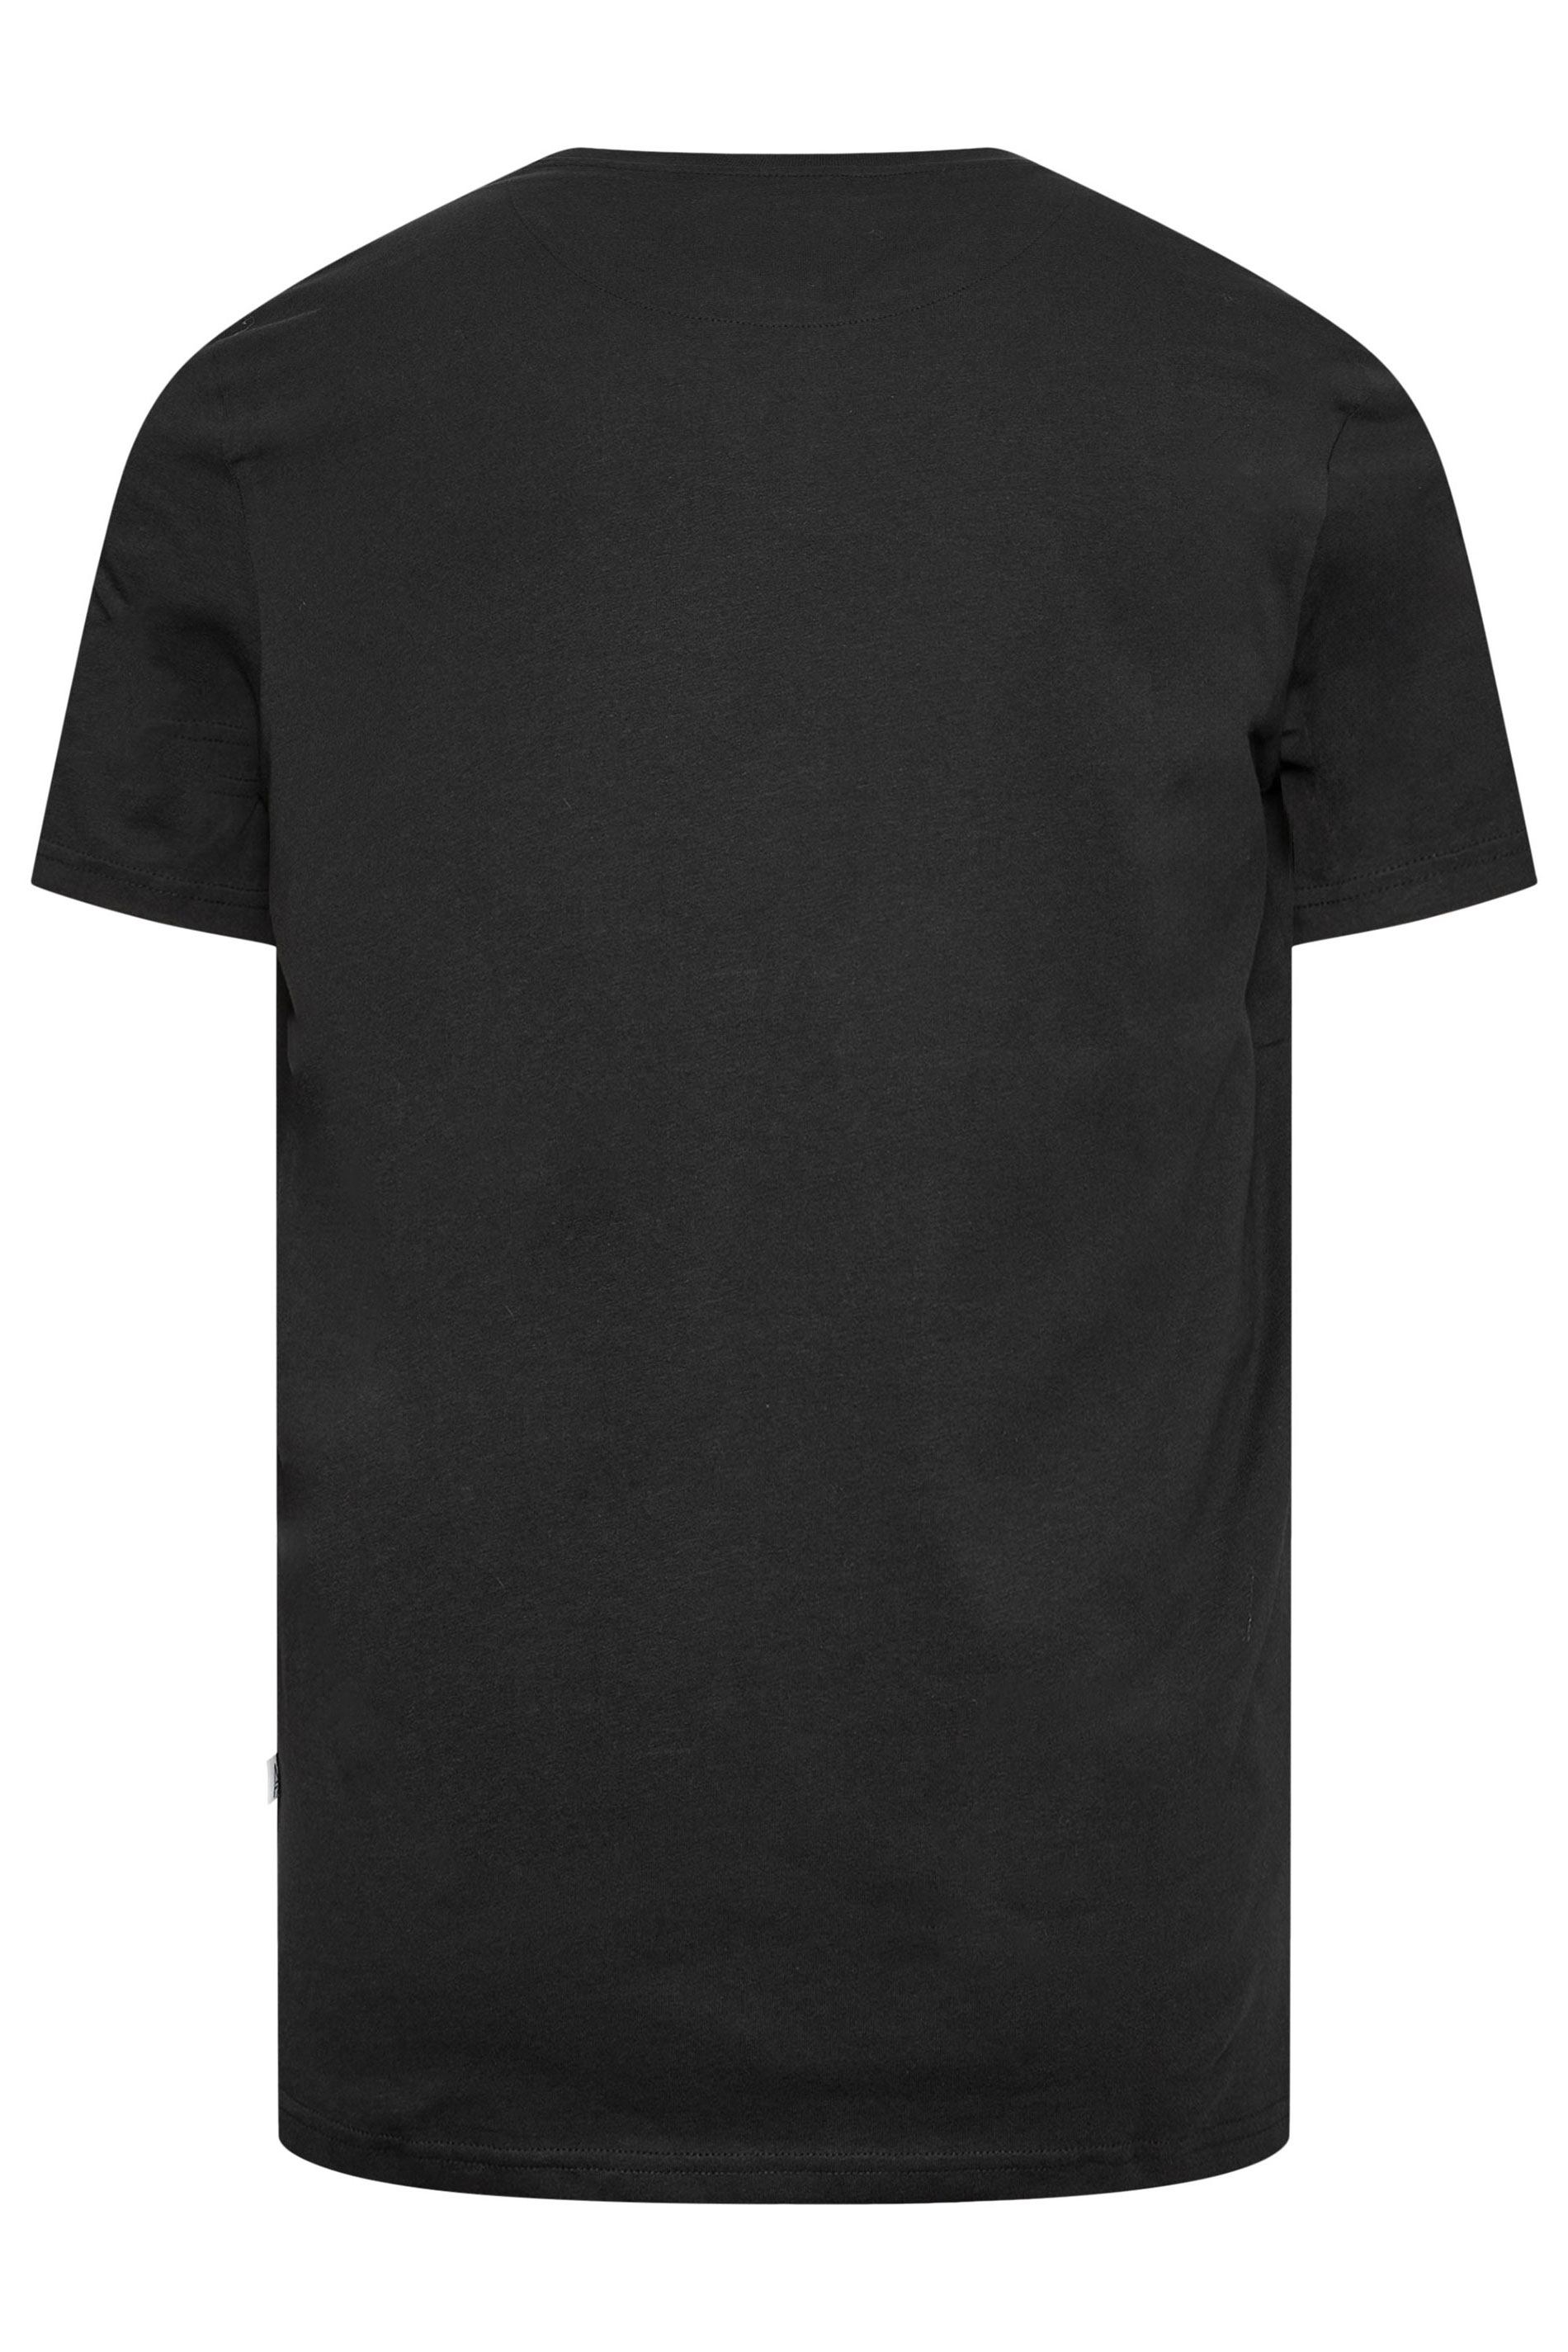 STUDIO A Big & Tall Black Logo T-Shirt | BadRhino 3